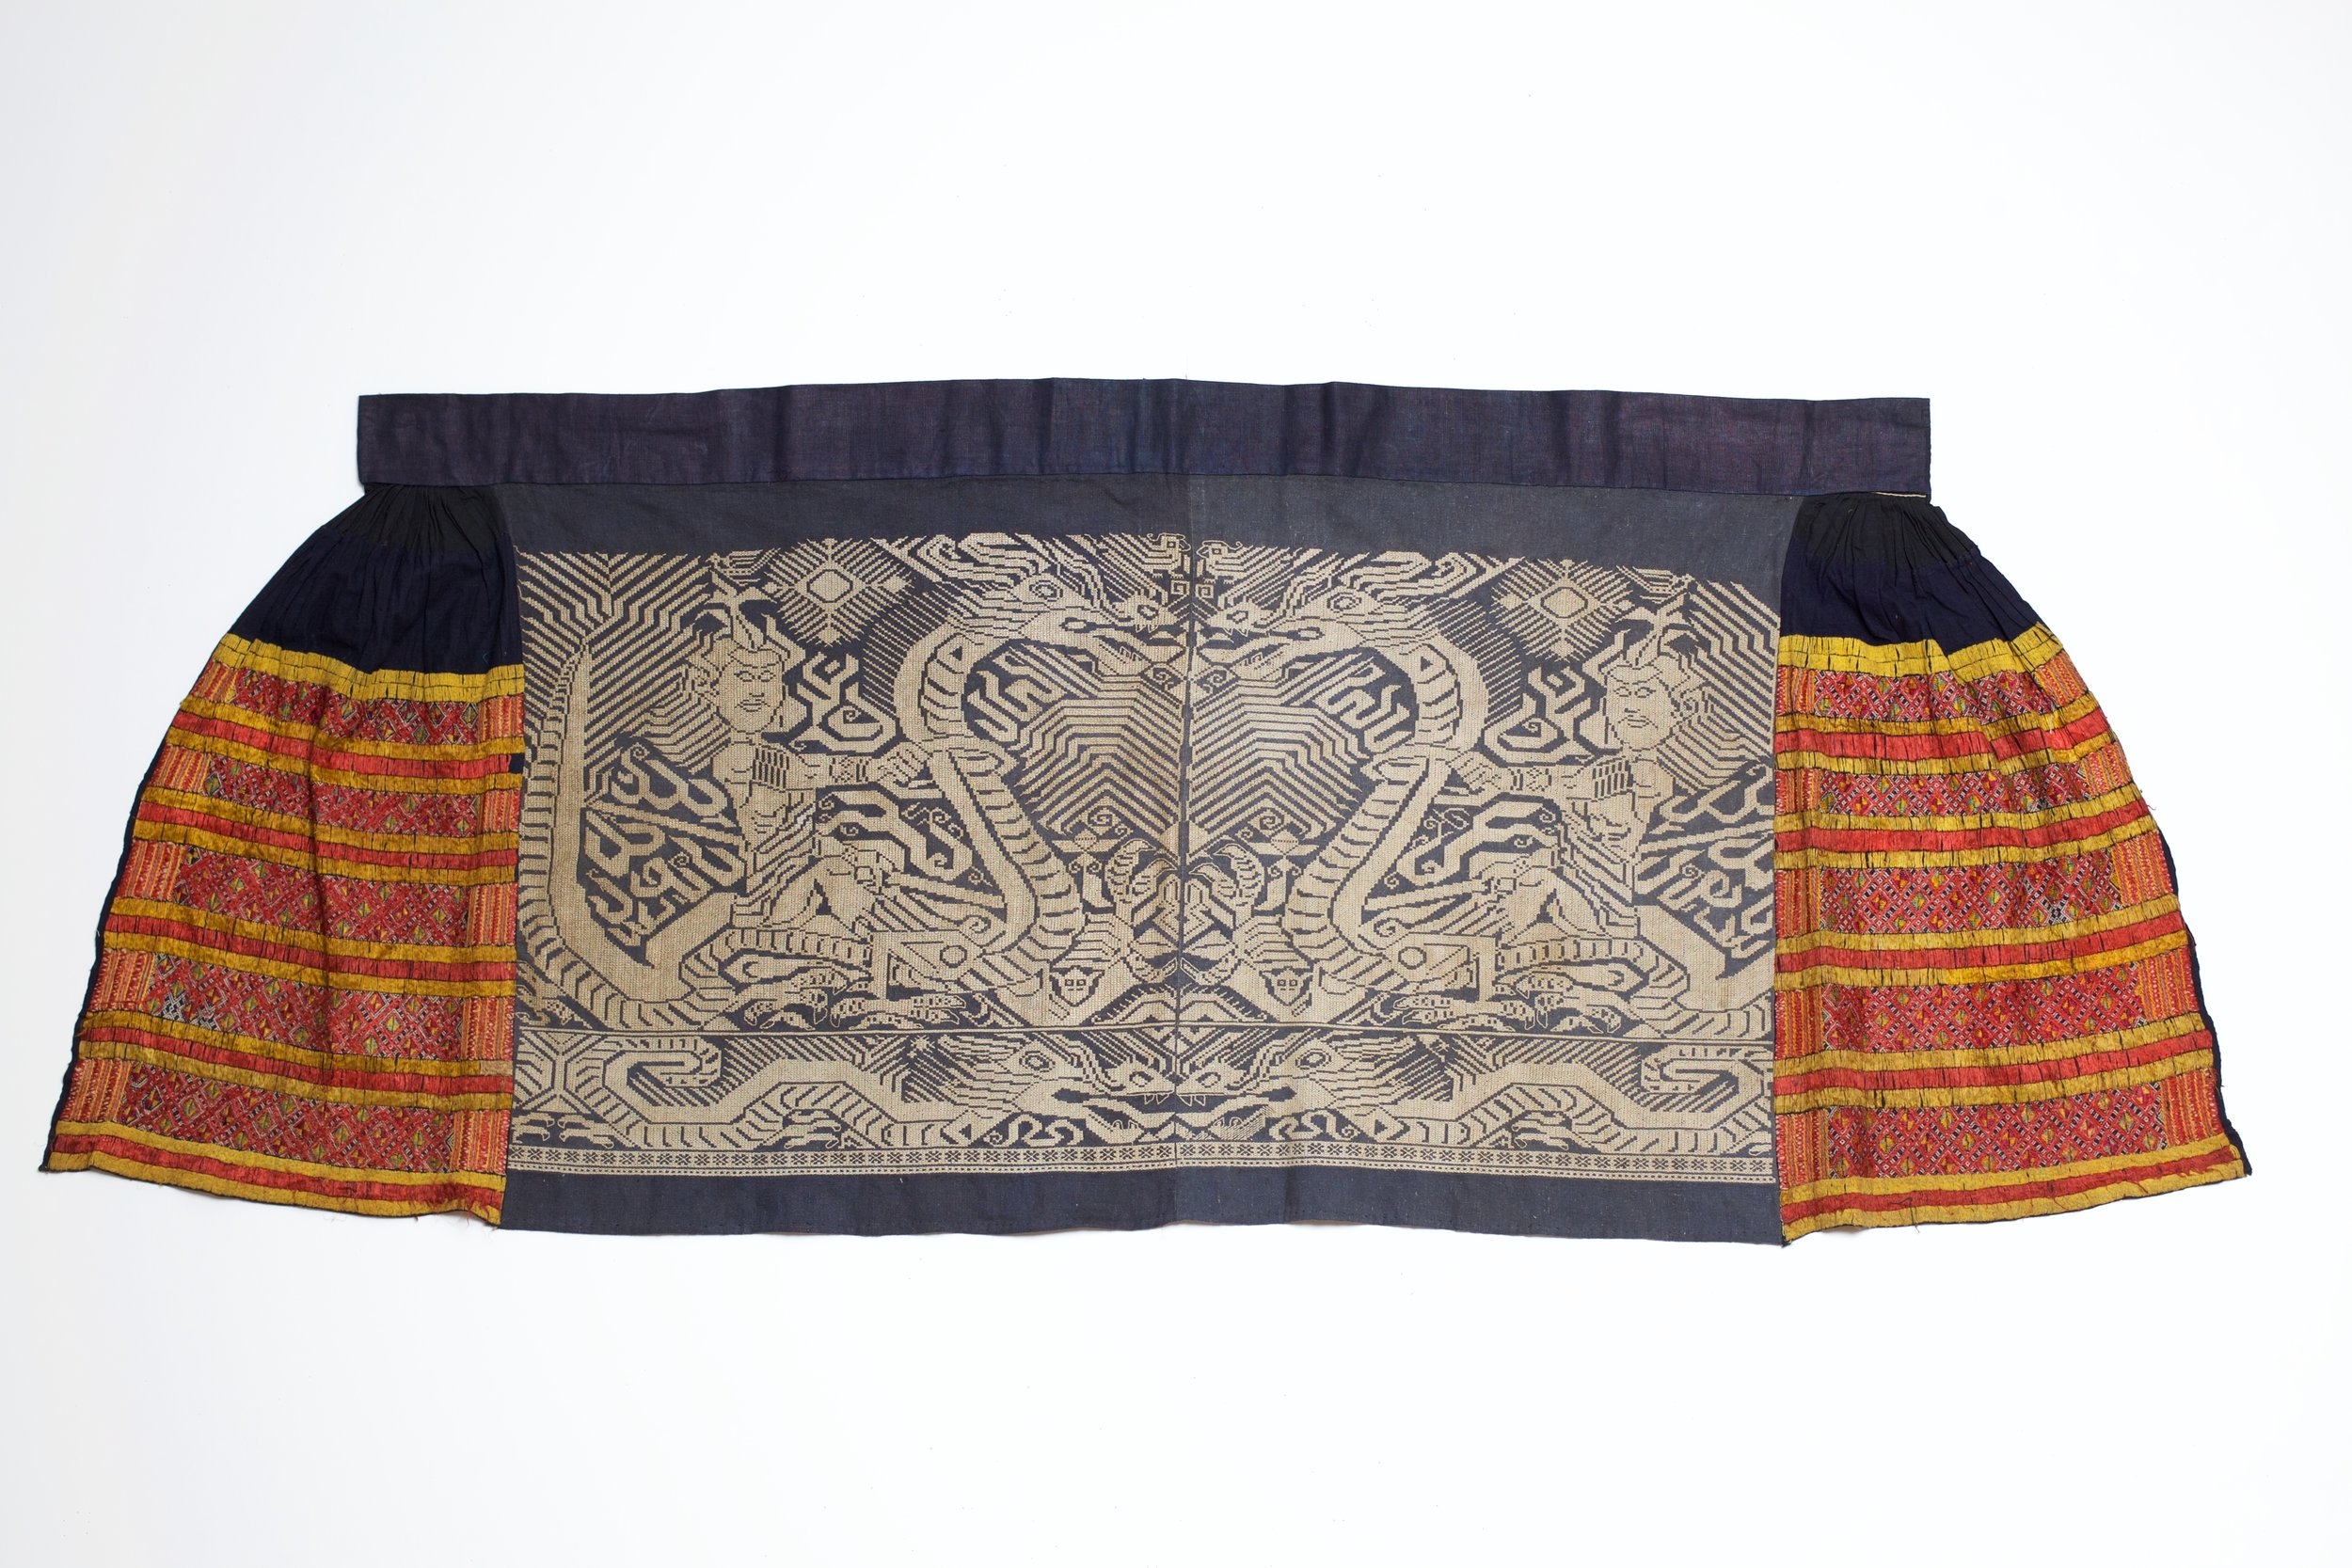 Hua Yao embroidered skirt, Hunan, China, early 20th century.